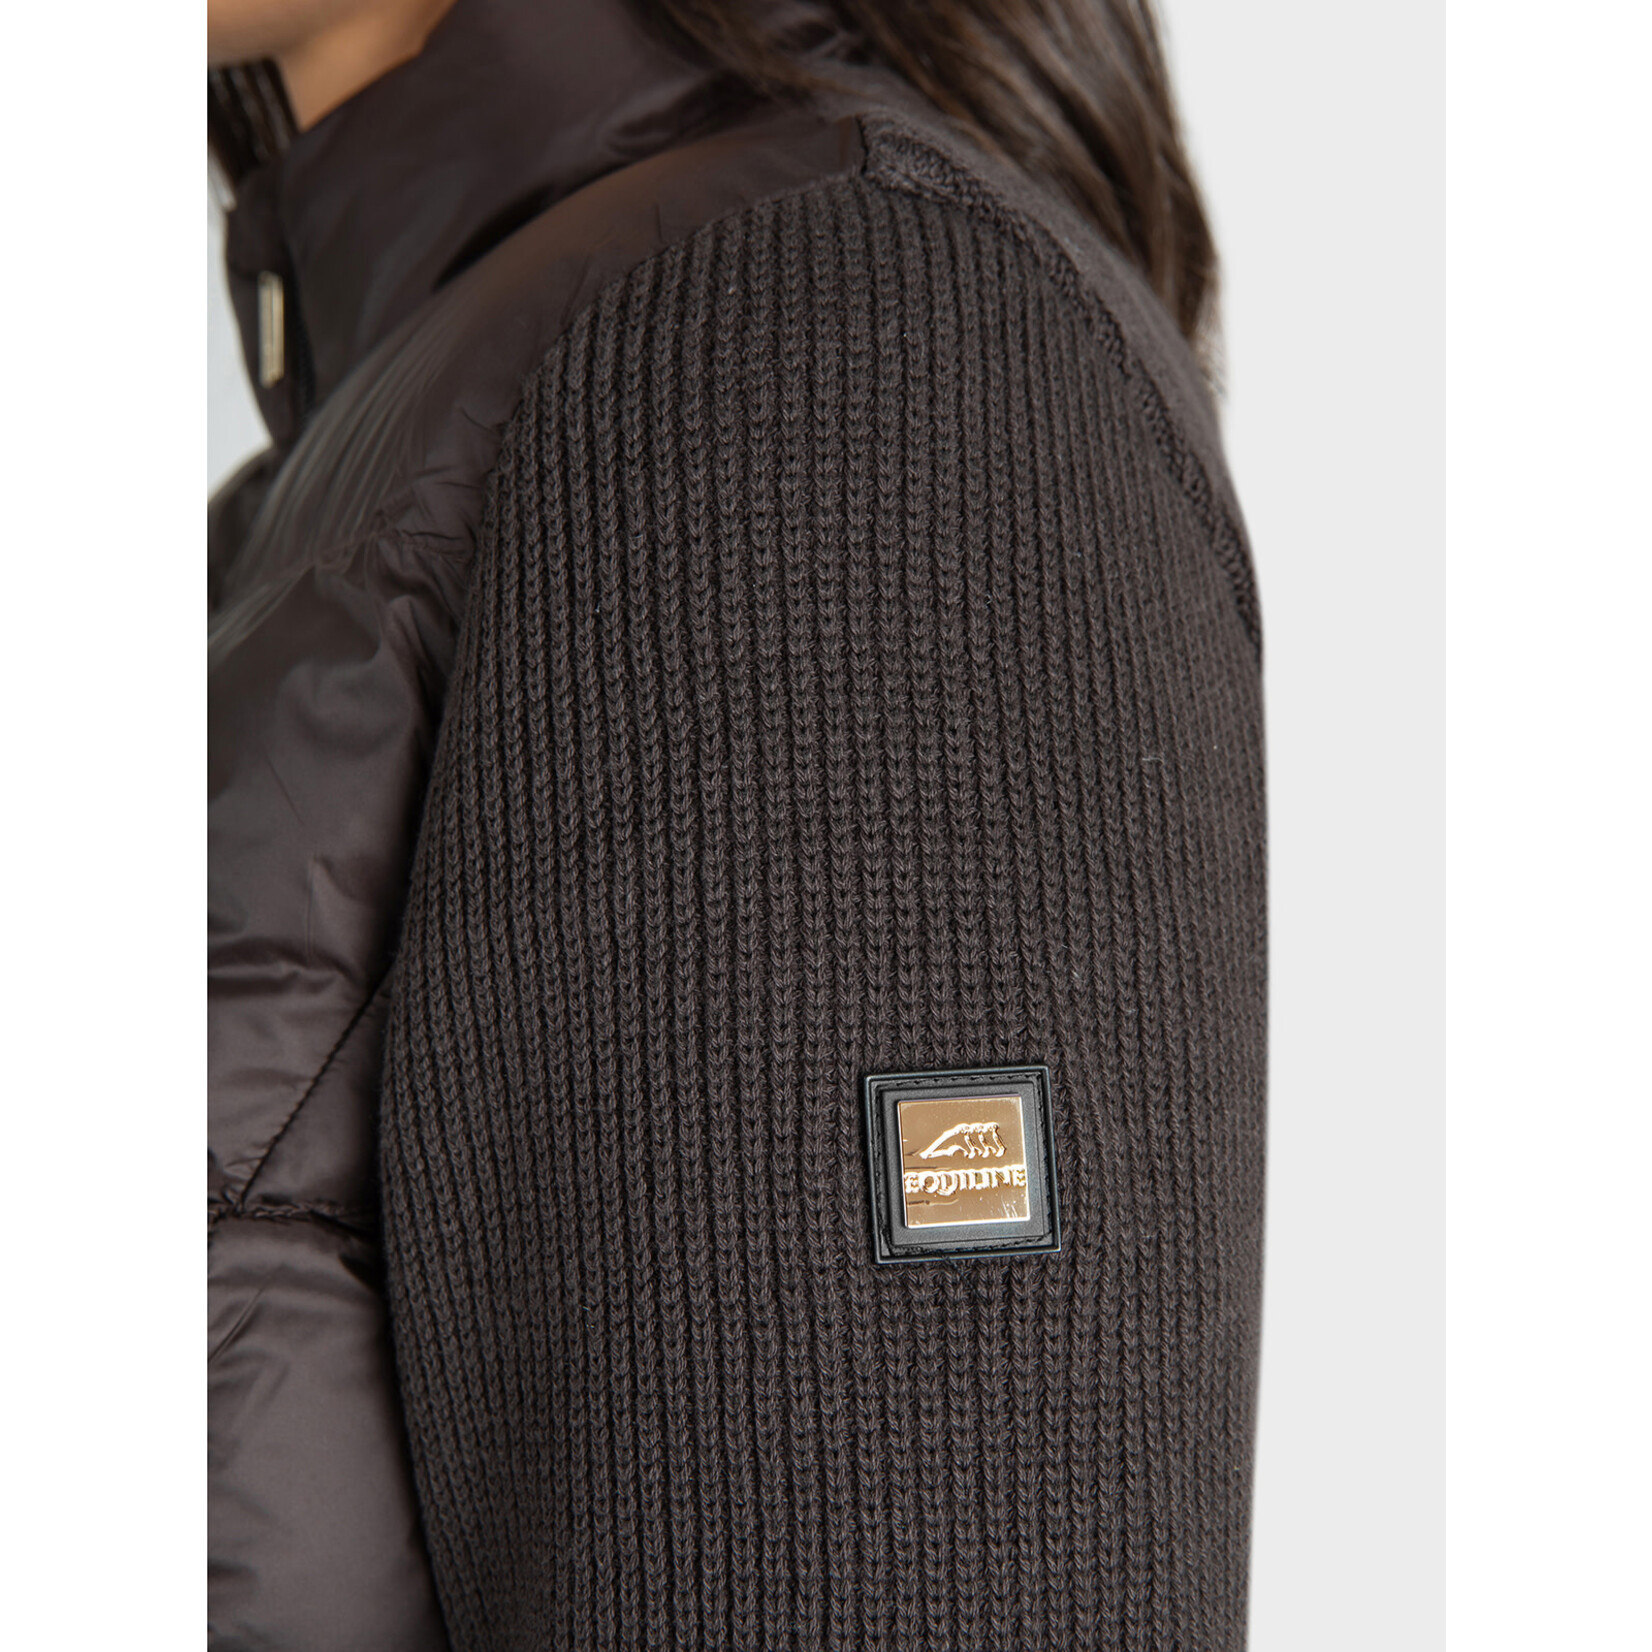 Equiline R09804 Equiline Estrae Knitwear/Nylon Women's Jacket